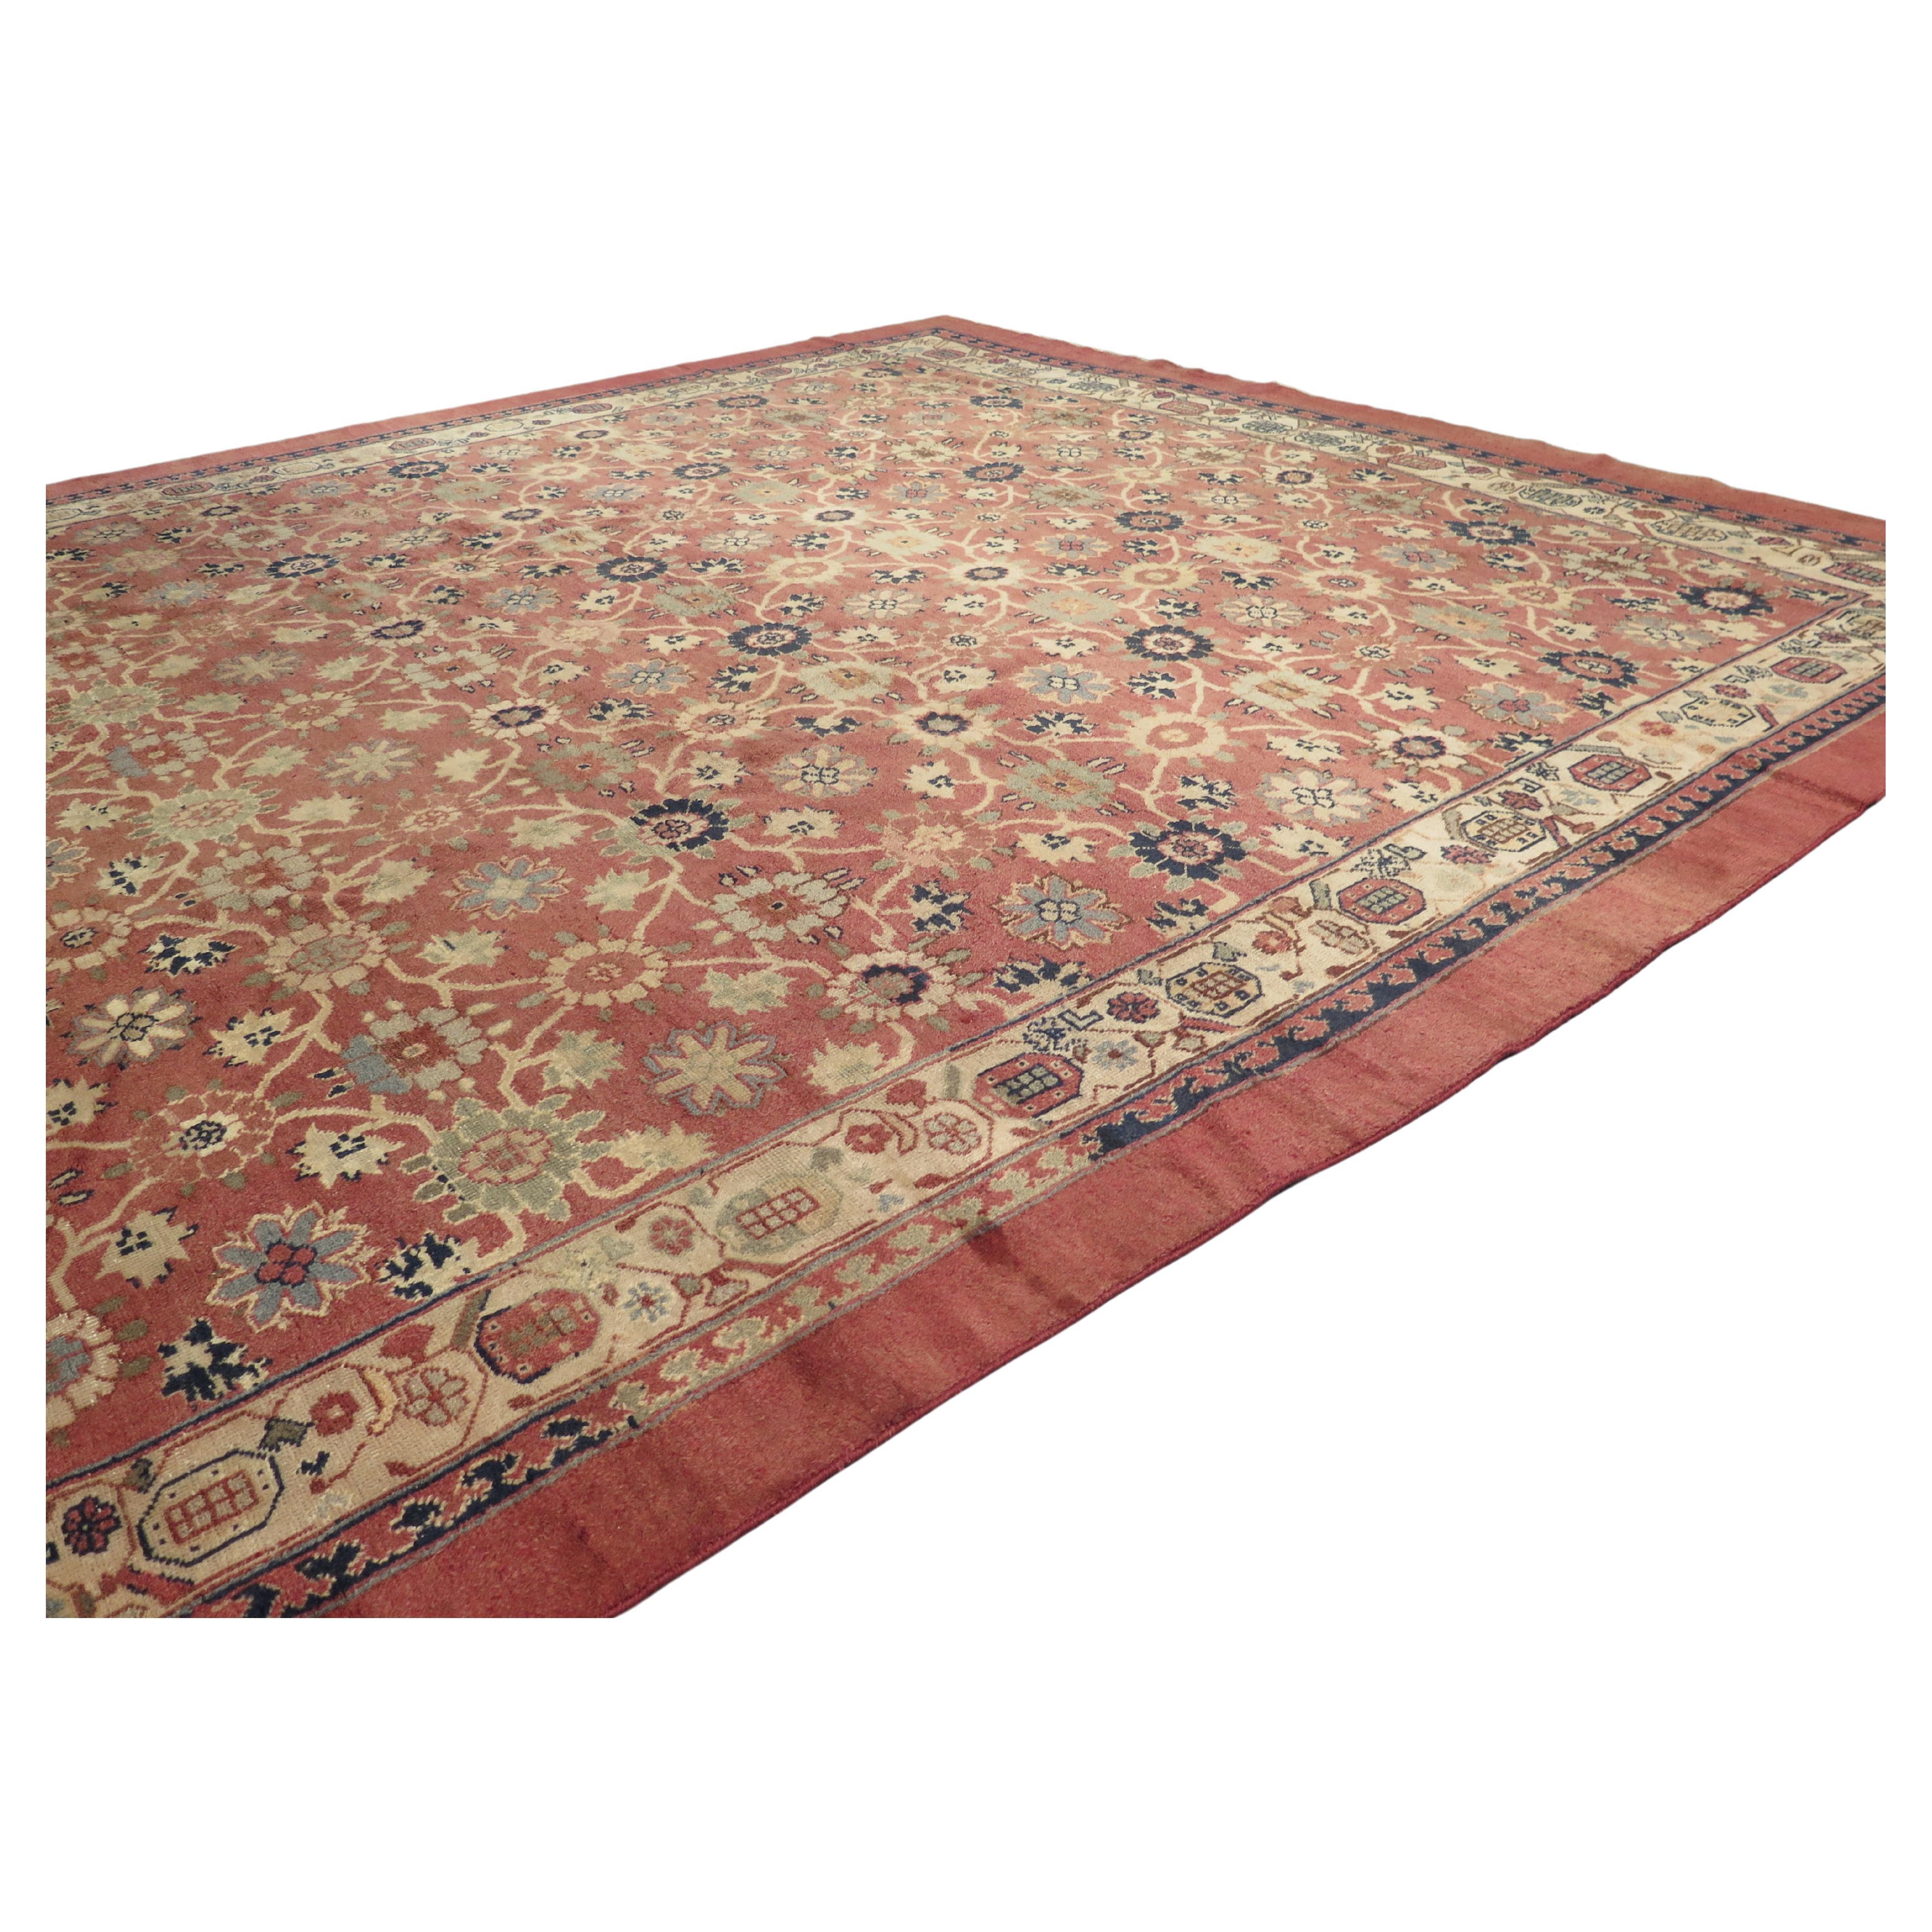 Unusual Antique Anatolian Carpet For Sale